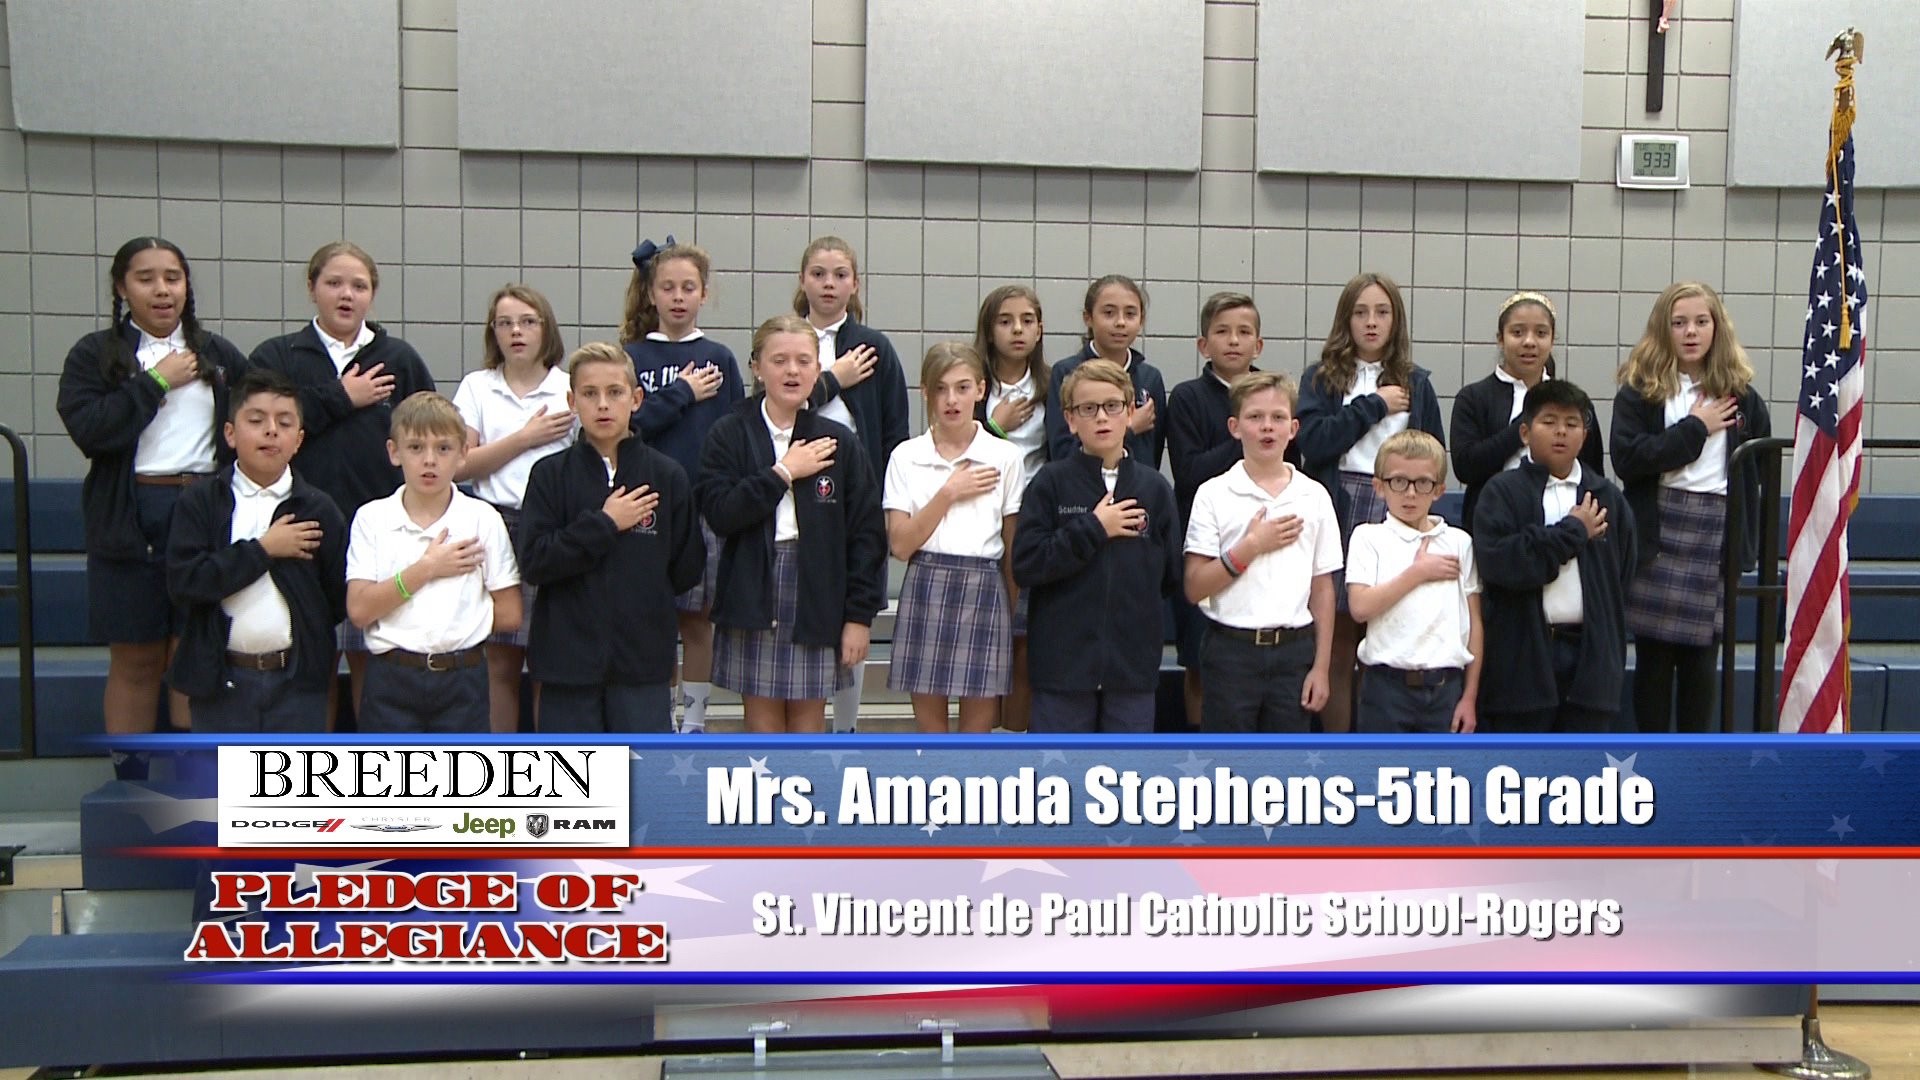 Mrs. Amanda Stephens  5th Grade -  St. Vincent de Paul Catholic School  Rogers